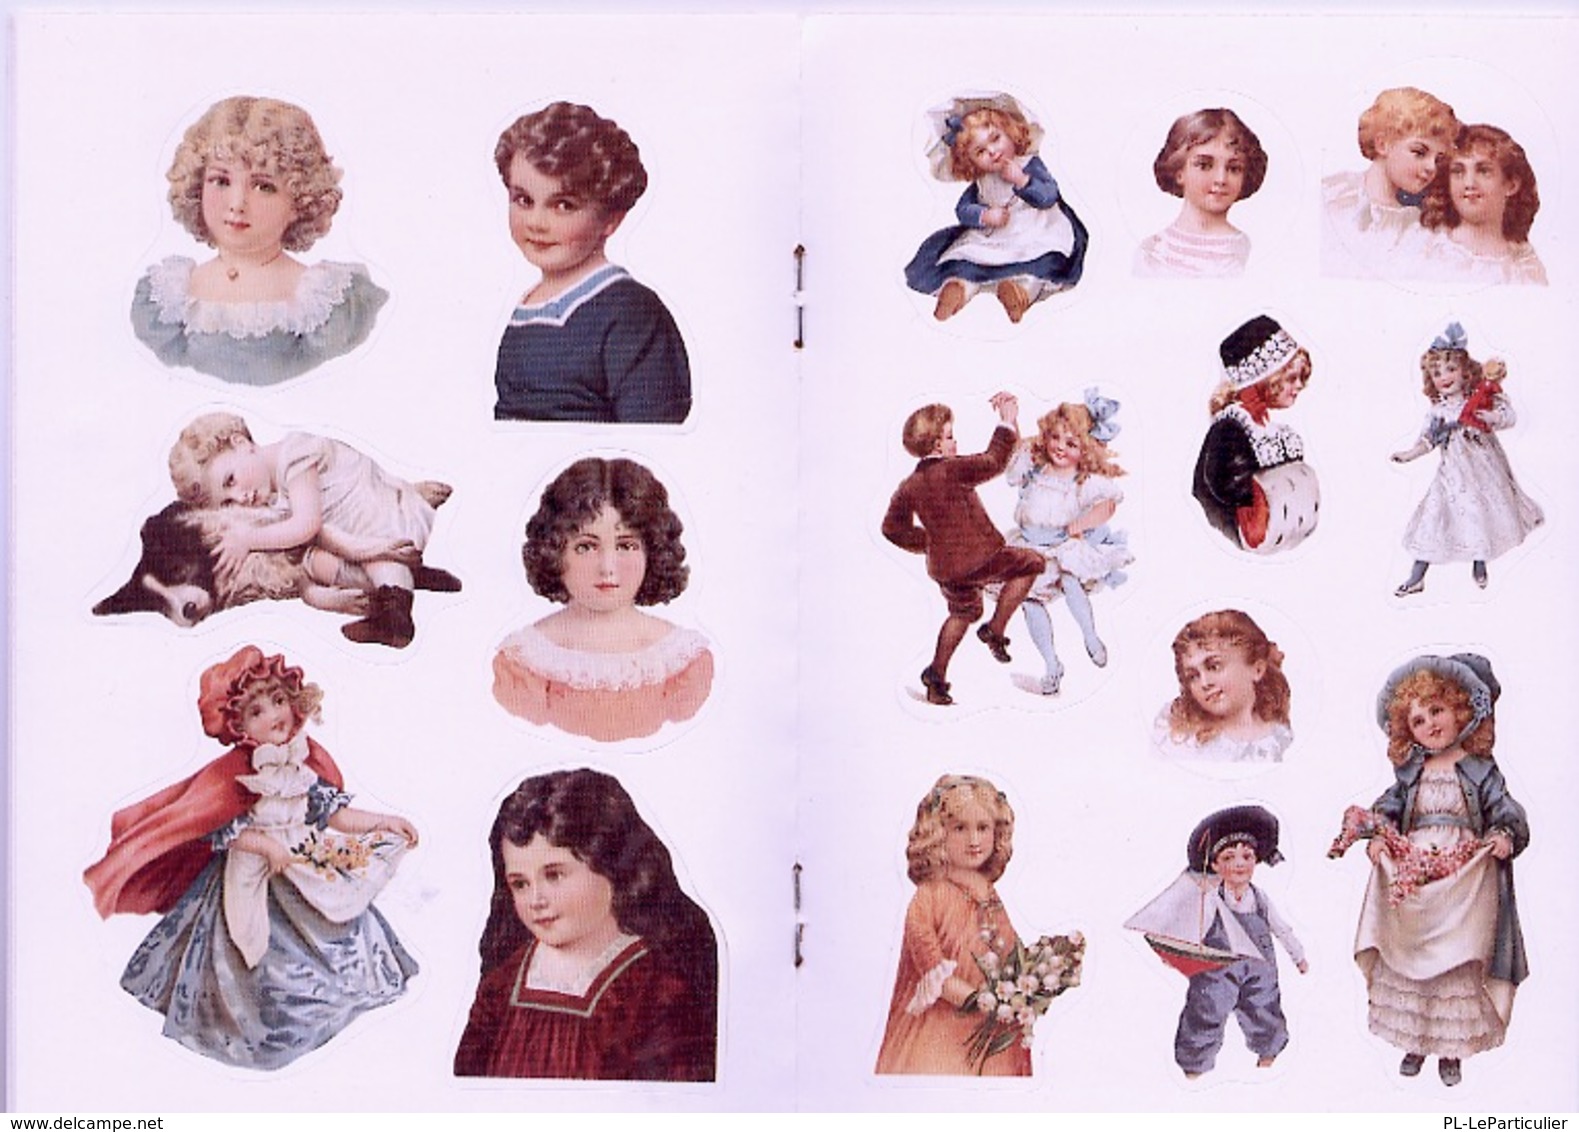 Old Time Children Stickers By Carol Belanger Grafton Dover USA (autocollants) - Activiteiten/ Kleurboeken